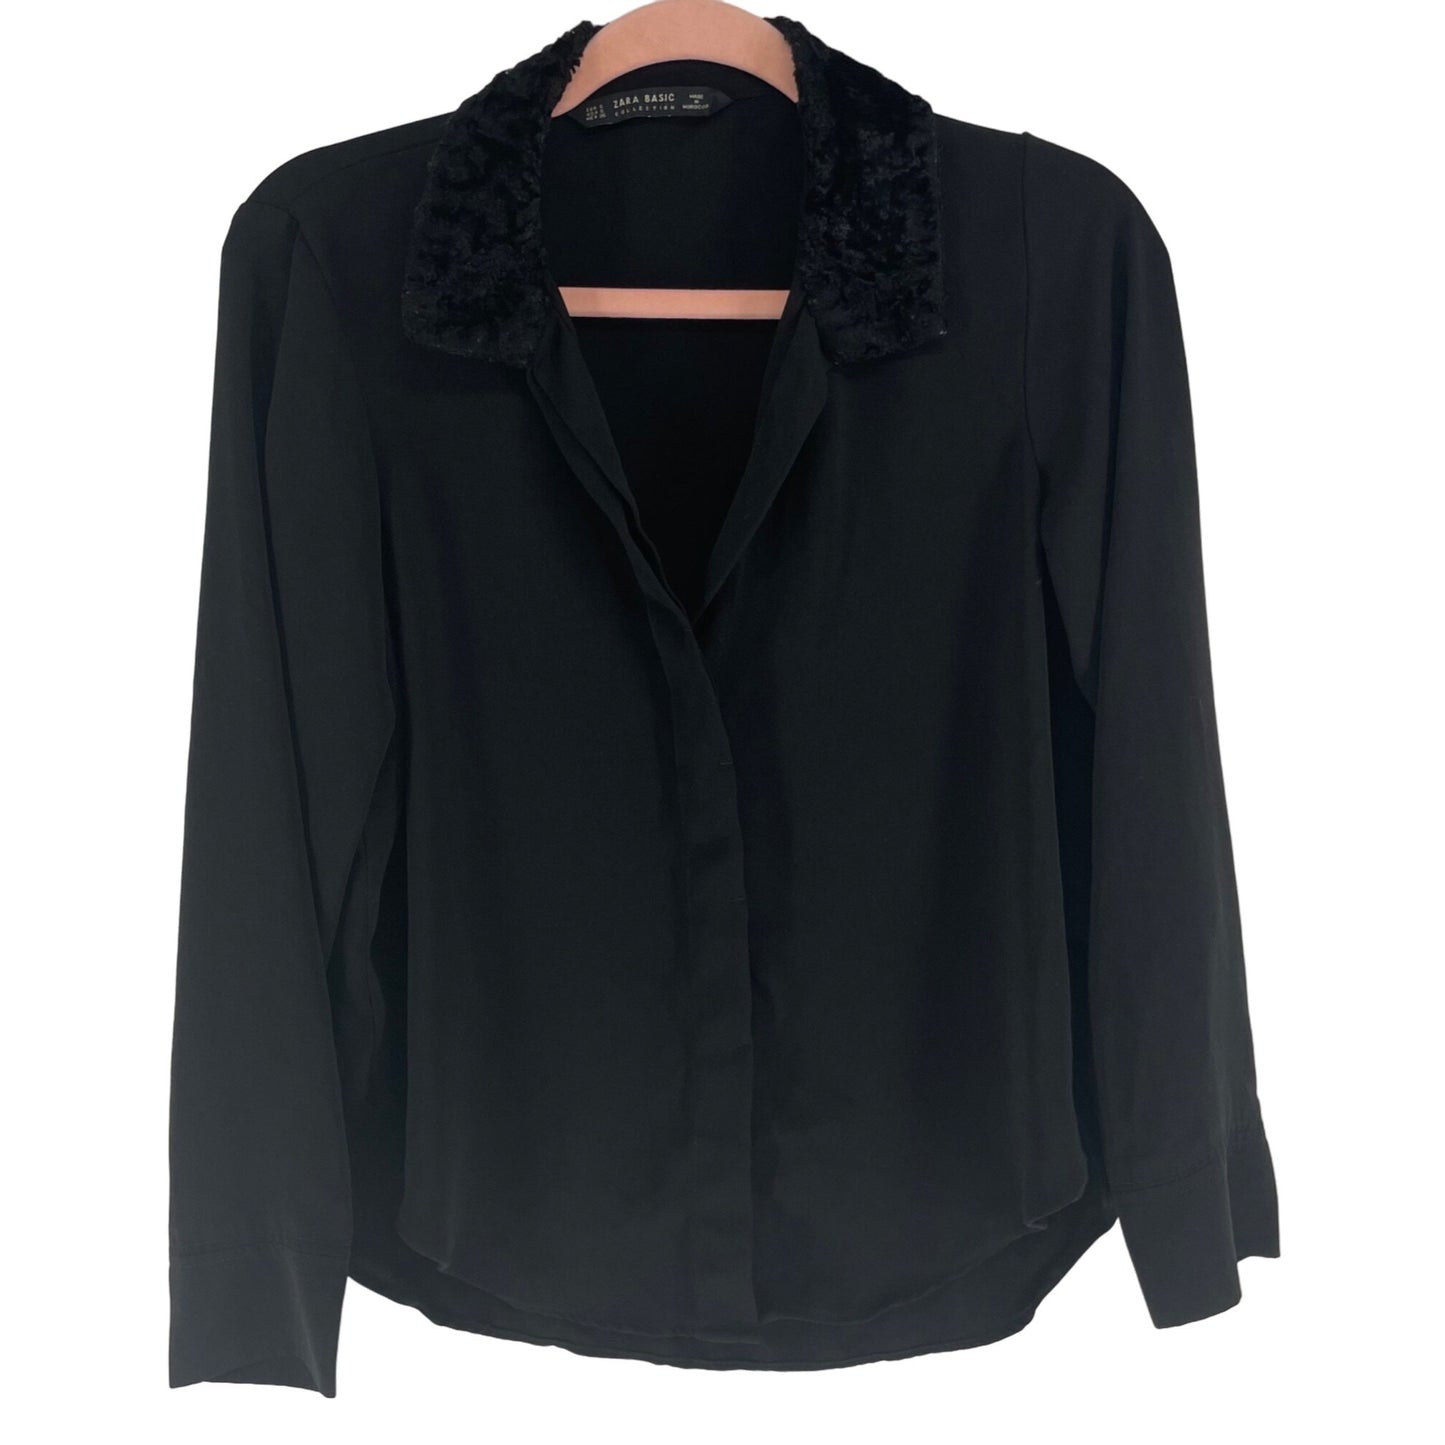 Zara Women's Size Small Black Long-Sleeved Button-Down Top W/ Faux Fur Collar